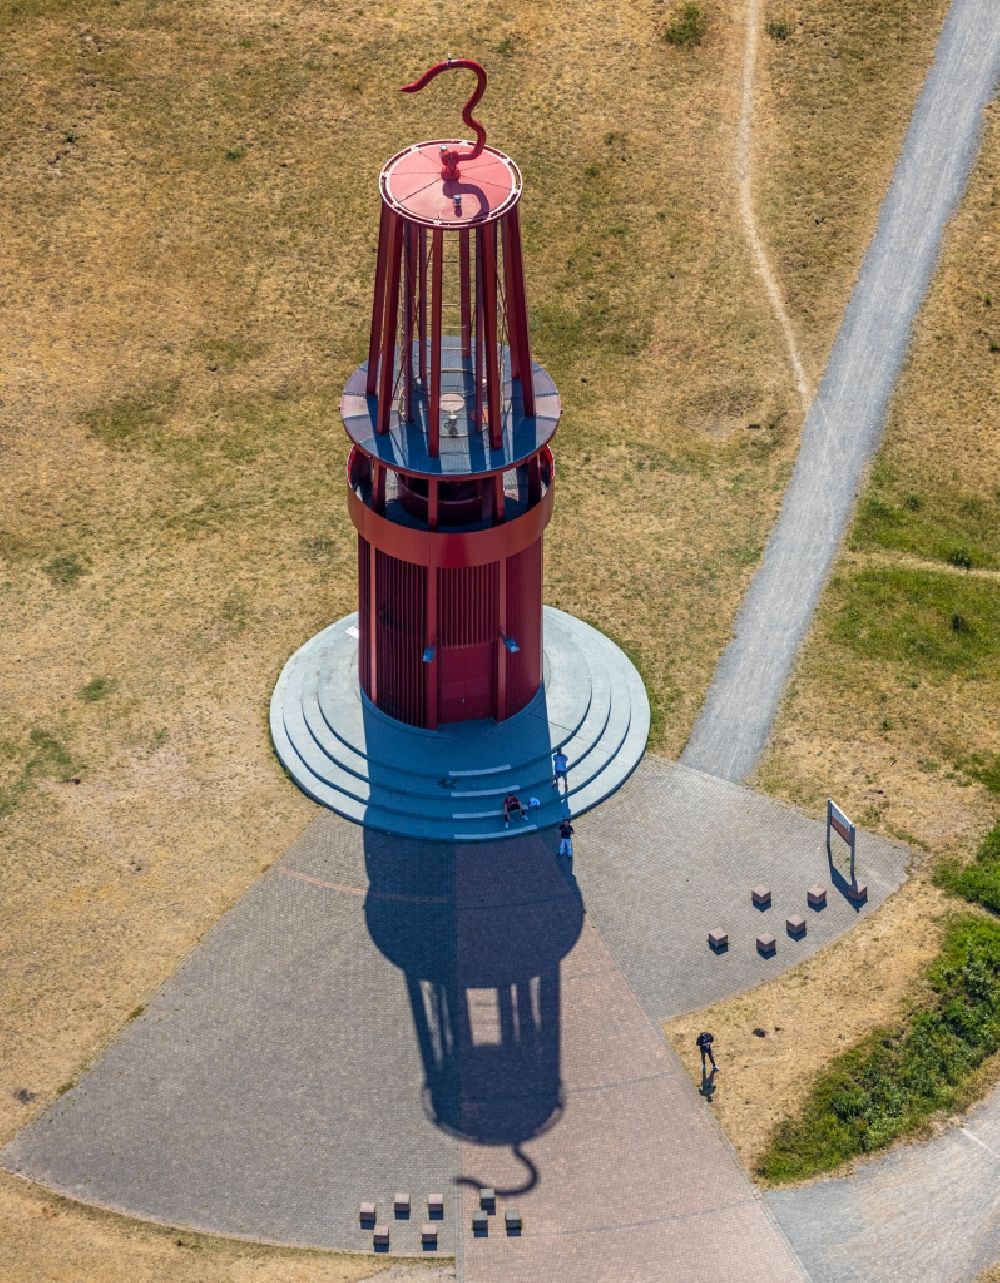 Moers from the bird's eye view: Sculpture of an oversized red miner's lamp on the grounds of renatured Halde Rheinpreussen in Moers in North Rhine-Westphalia